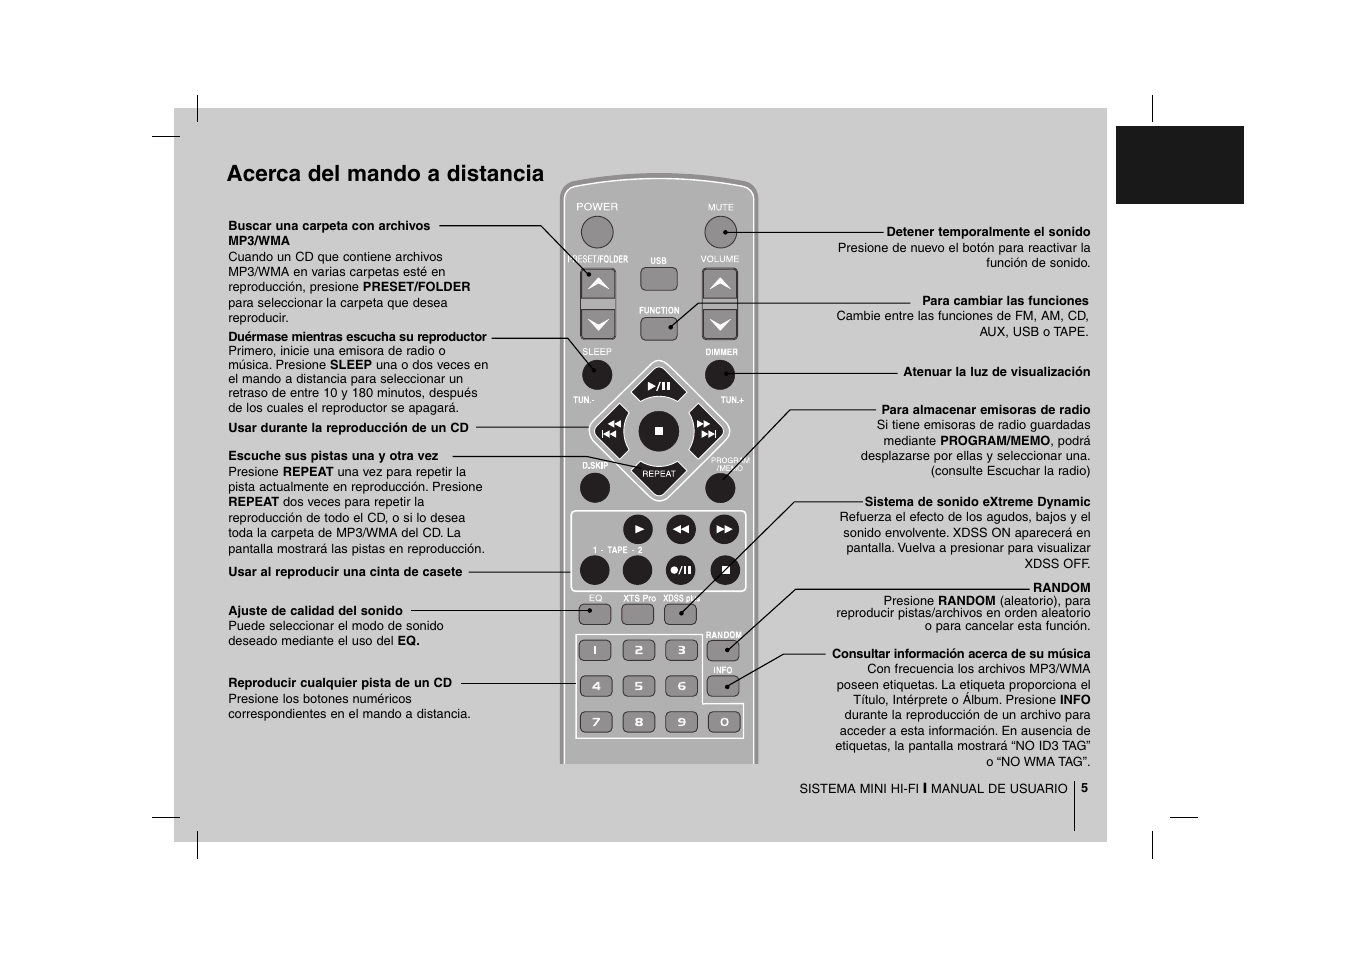 Acerca del mando a distancia | LG MCD212 Manual del usuario | Página 5 / 12